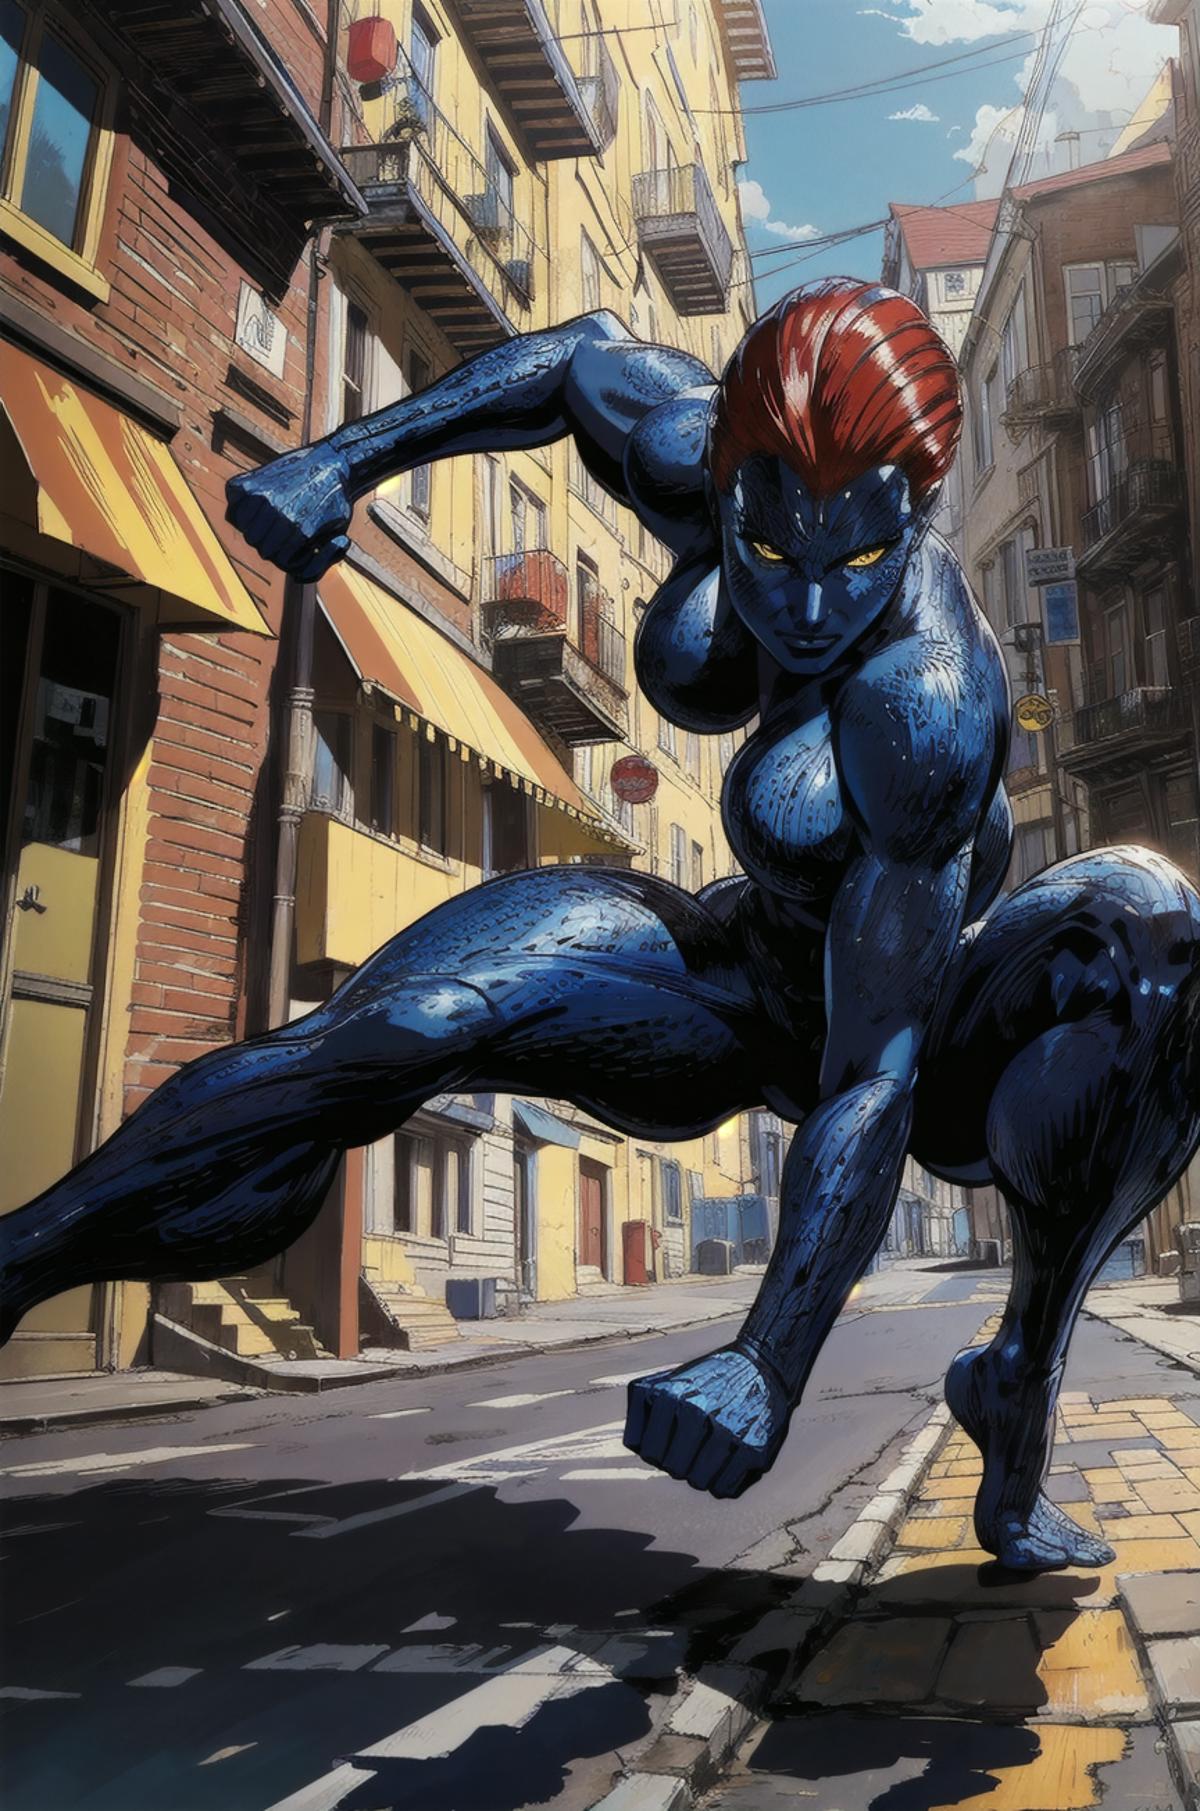 Mystique (X-men Movies) image by TonyVan